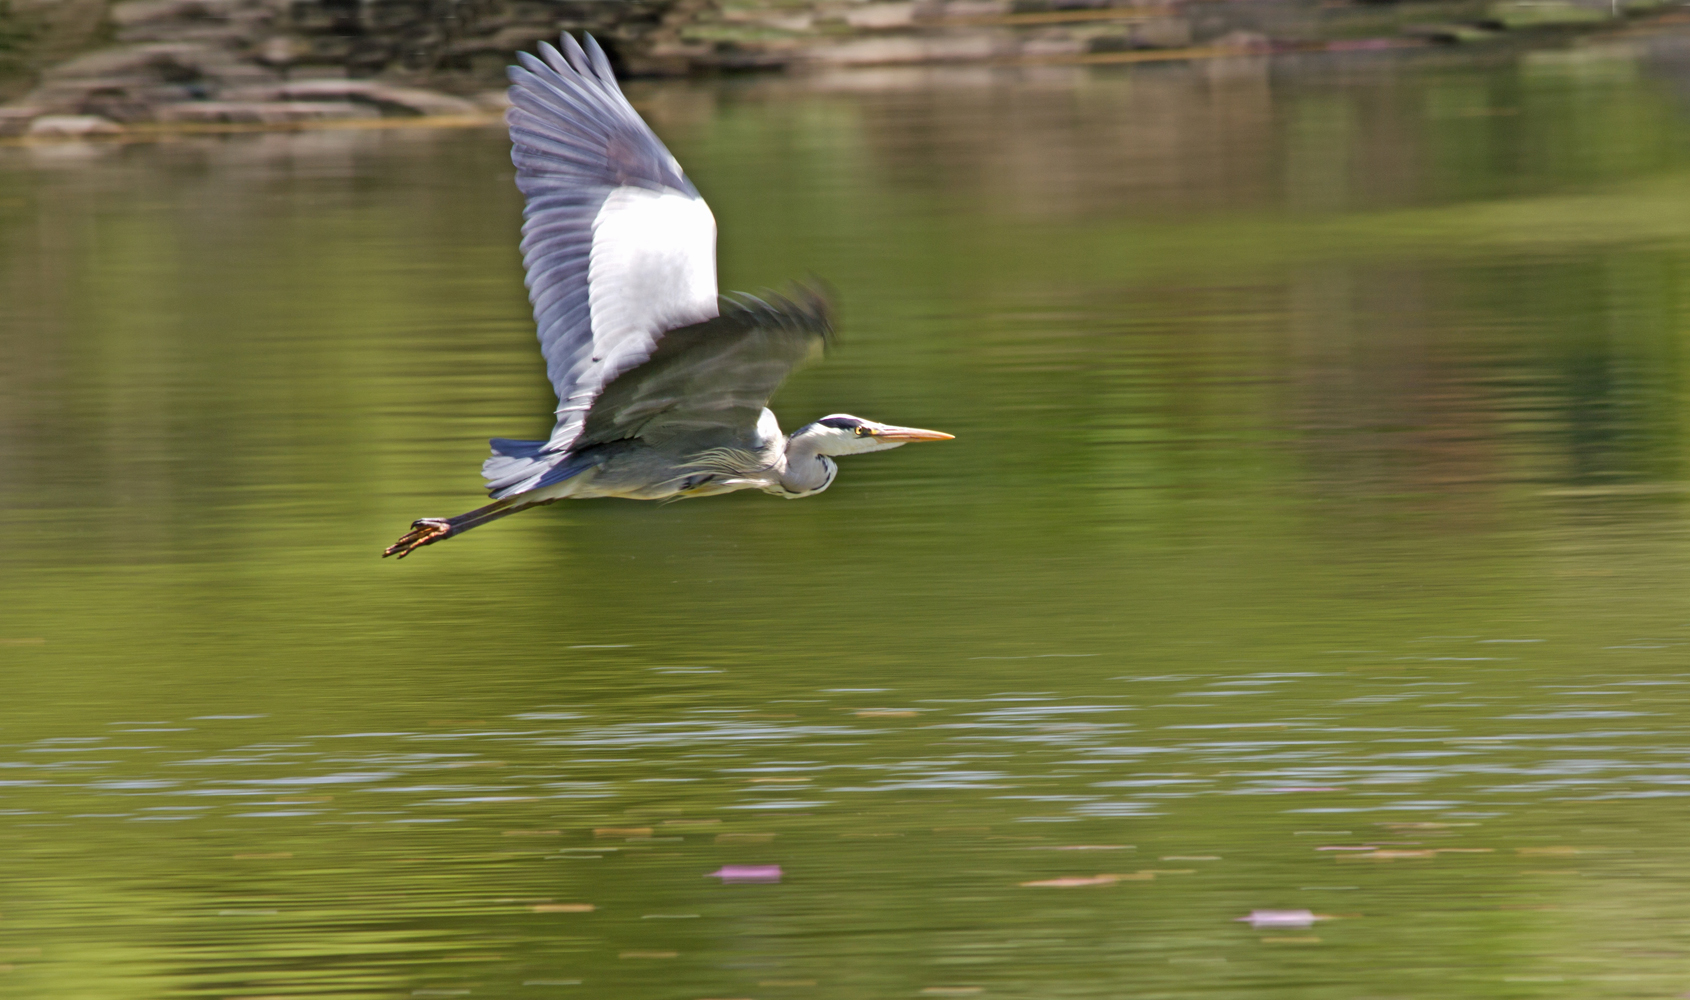 Flying heron aberlady